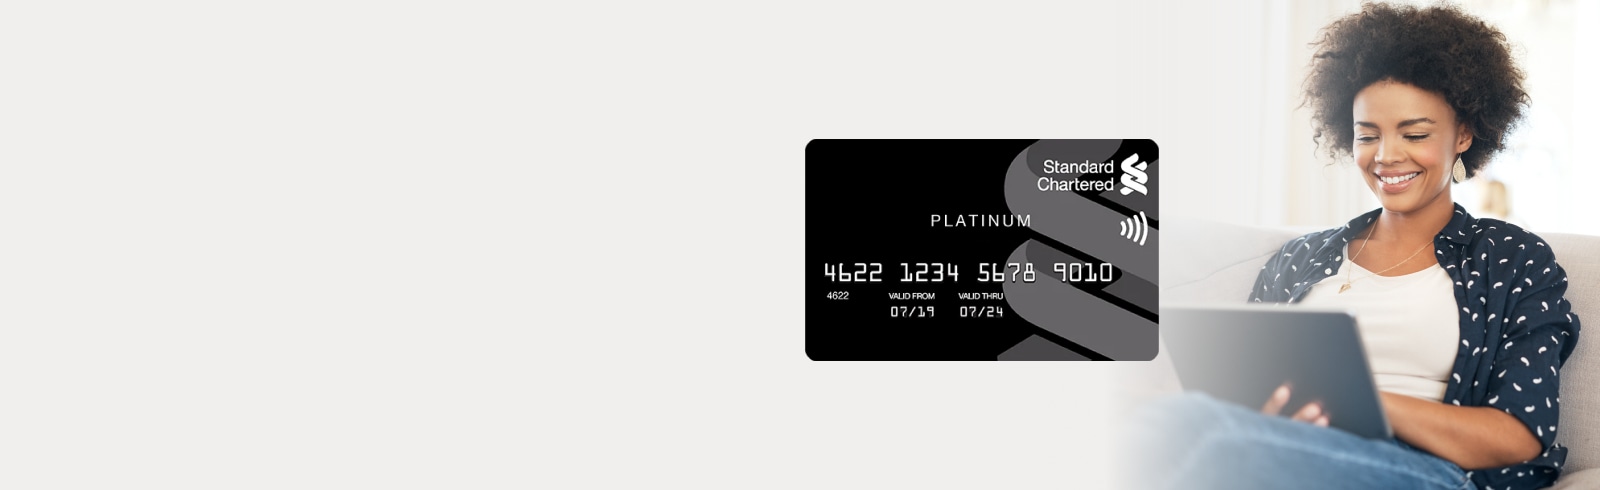 Apply for Visa Platinum Credit Card